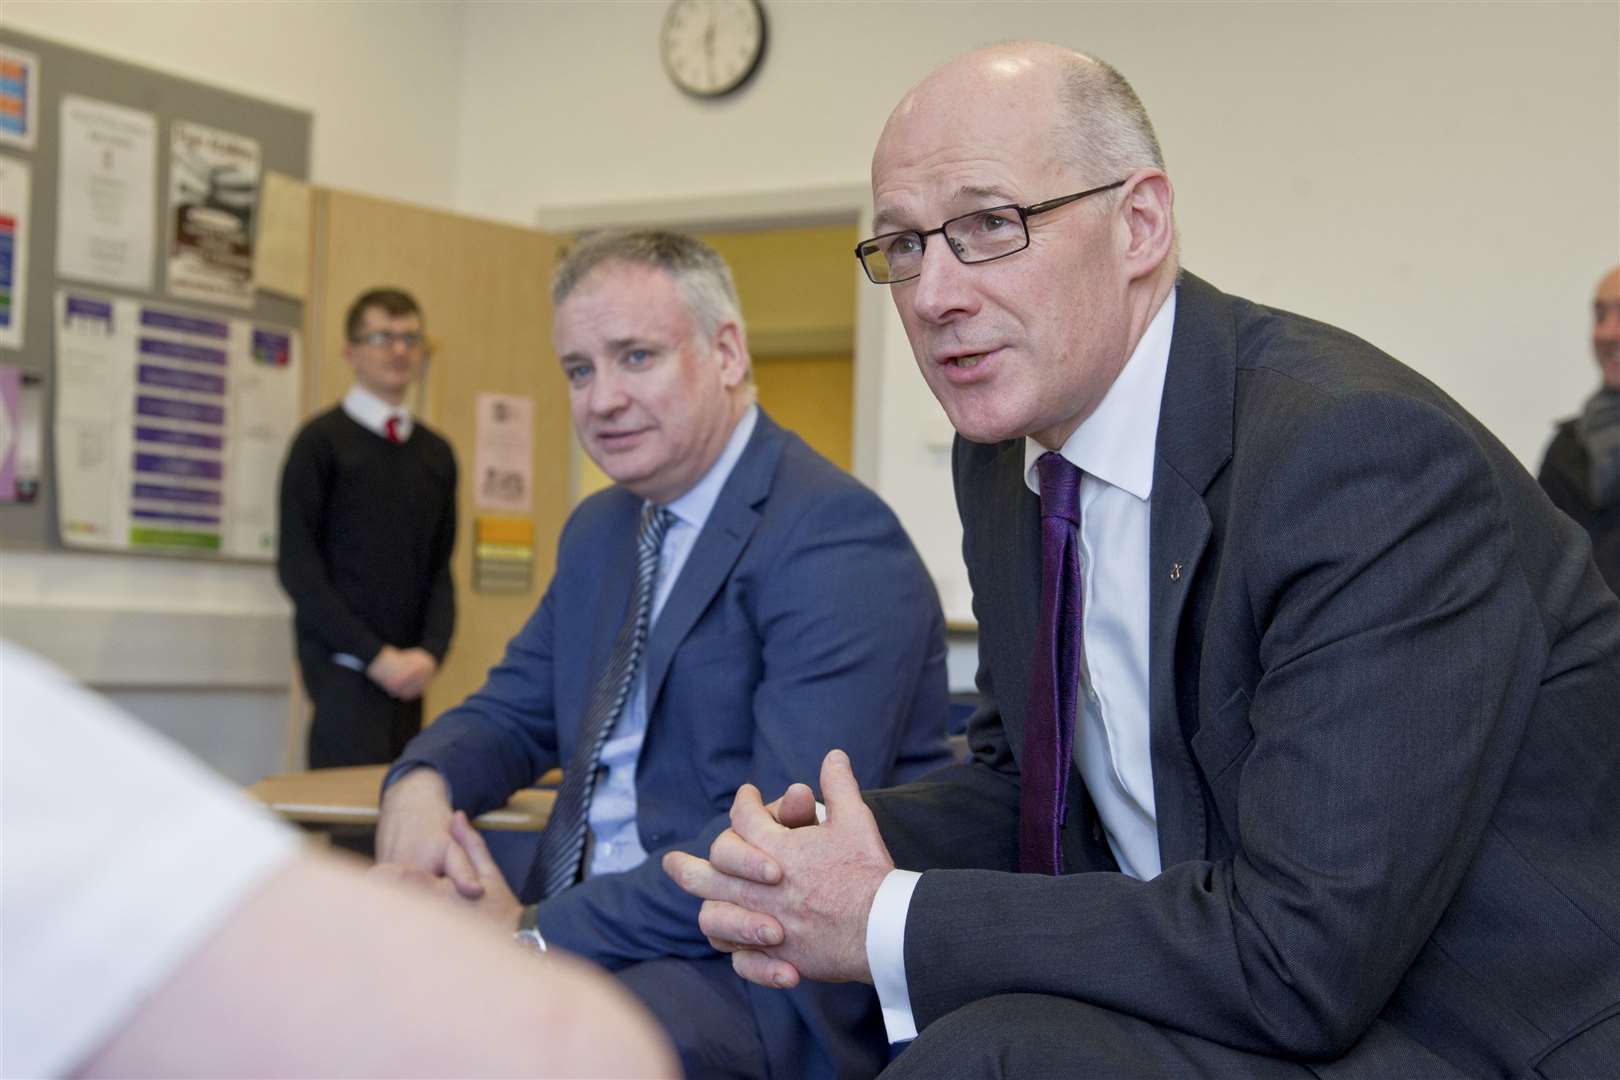 John Swinney, Deputy First Minister of Scotland and Education Secretary, at Elgin Academy with MSP Richard Lochhead. Picture: Daniel Forsyth